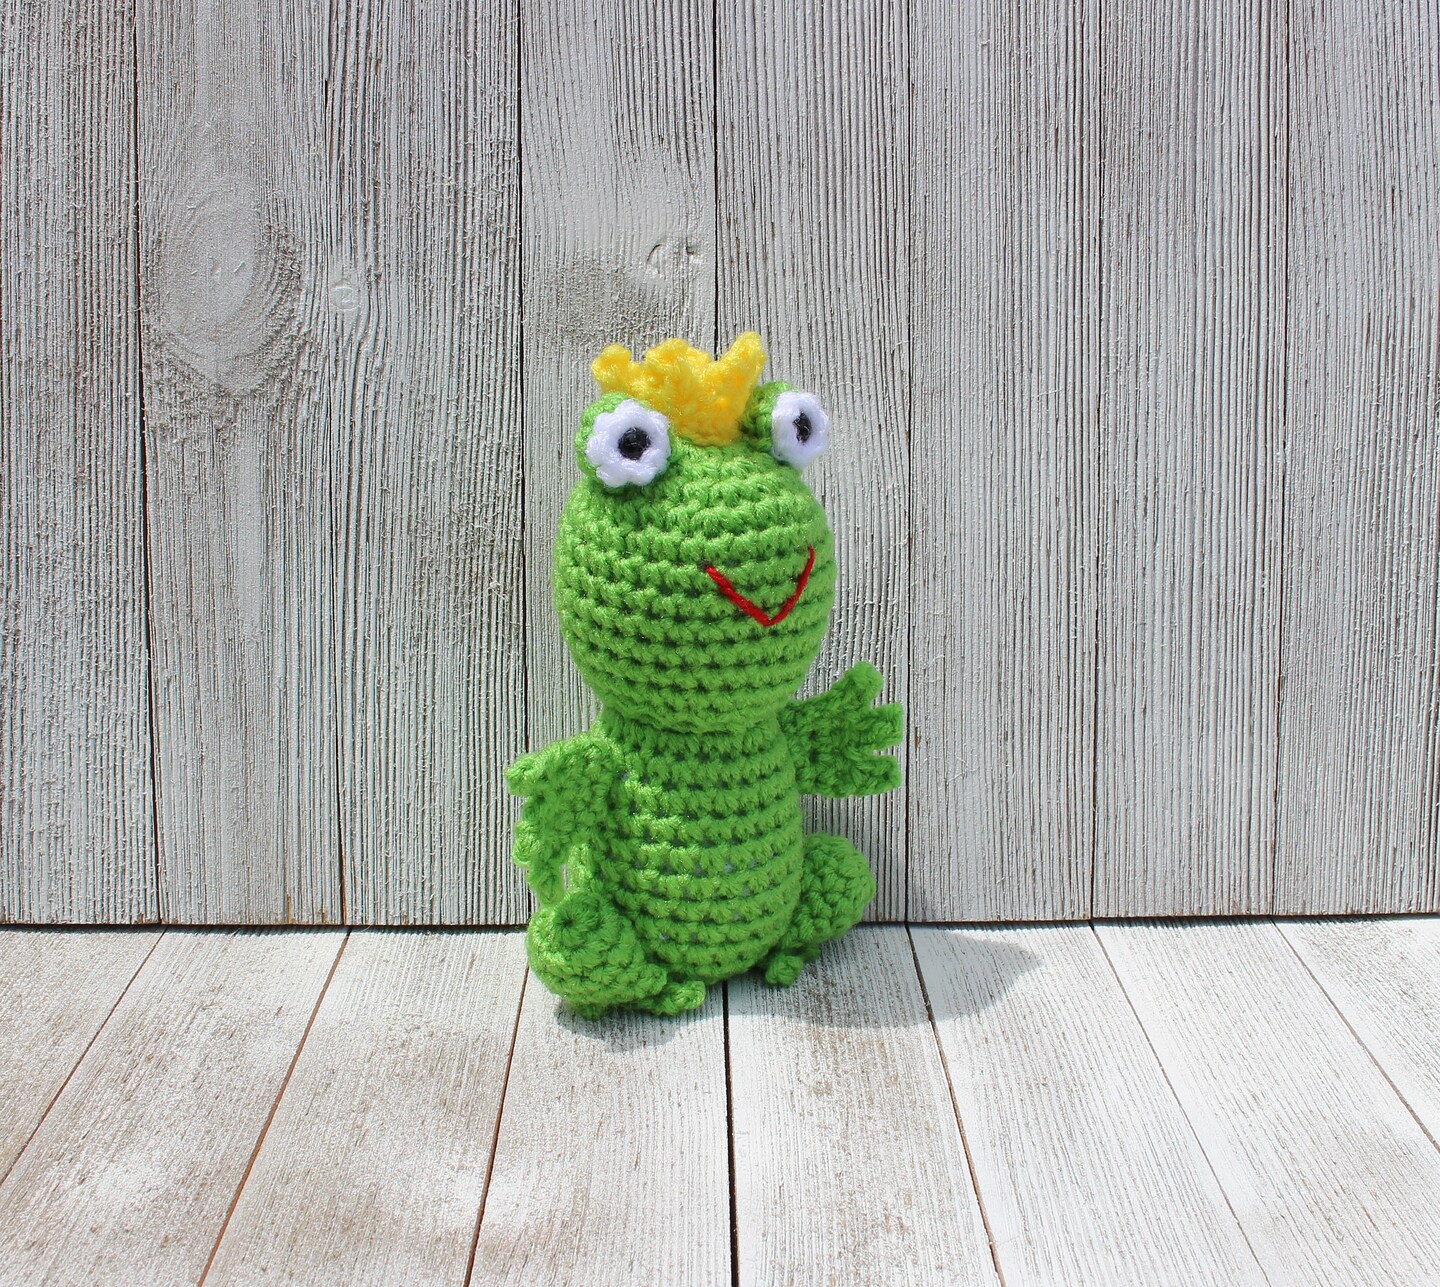 Handmade Crochet Little Amigurumi Plush Toy Prince Princess Frog - Ready to  ship